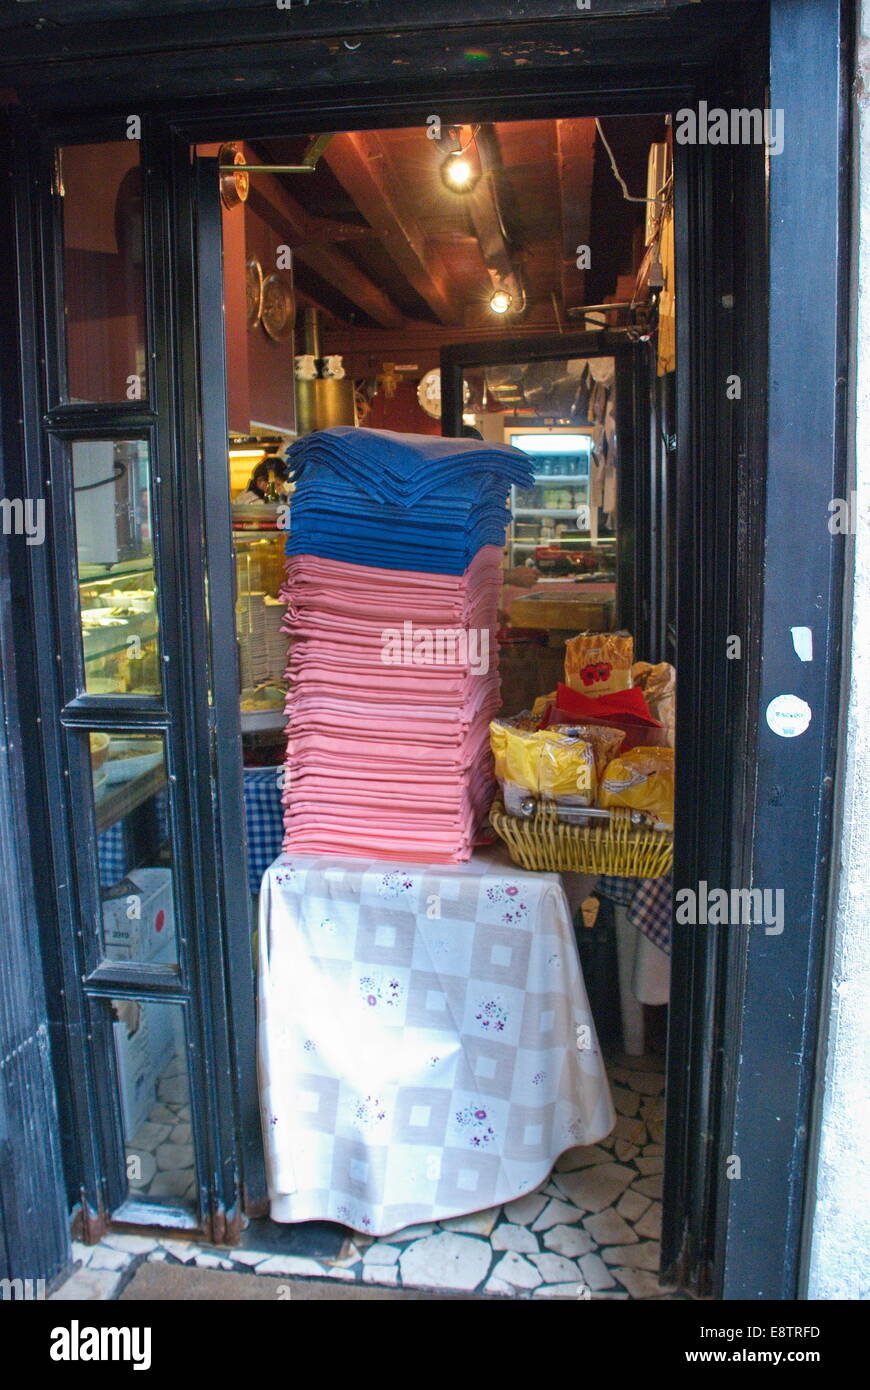 Bunte Stapel auf Leinen in Tür des Stores in Venedig, Italien. Stockfoto